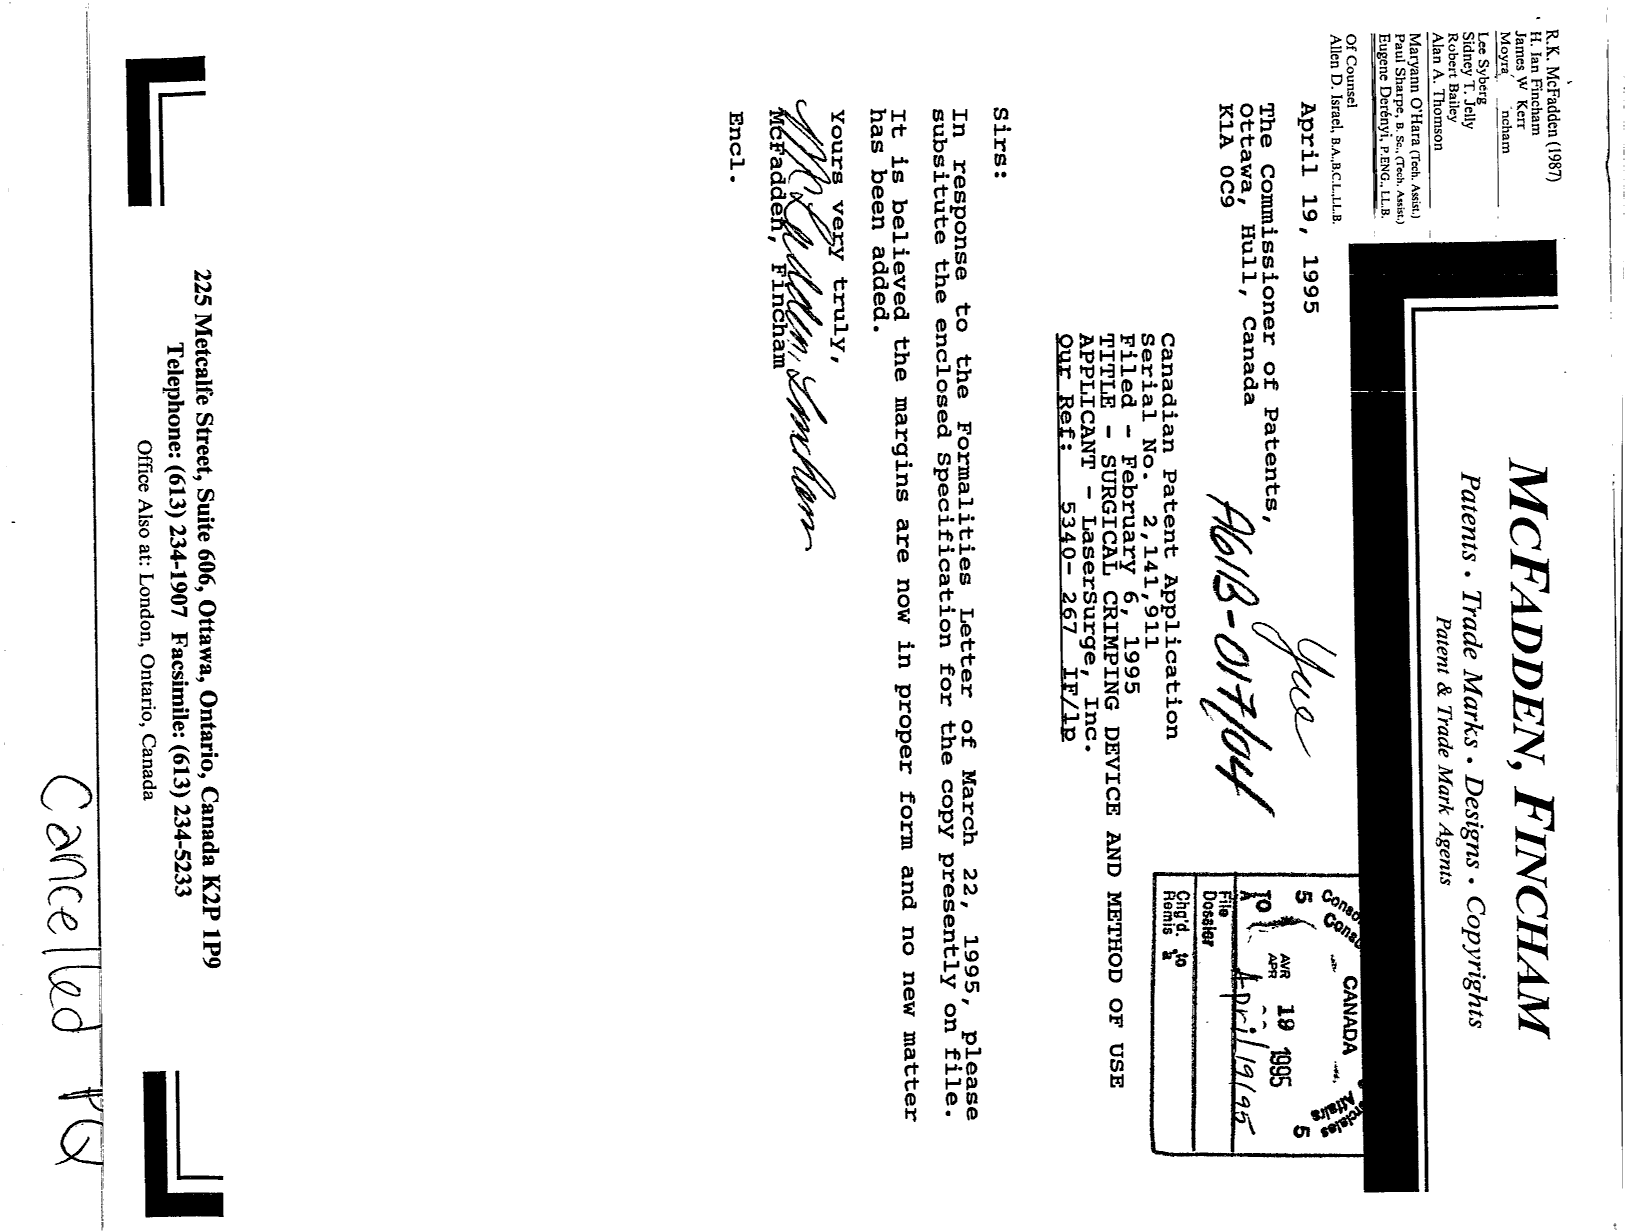 Canadian Patent Document 2141911. Correspondence 19941222. Image 3 of 31